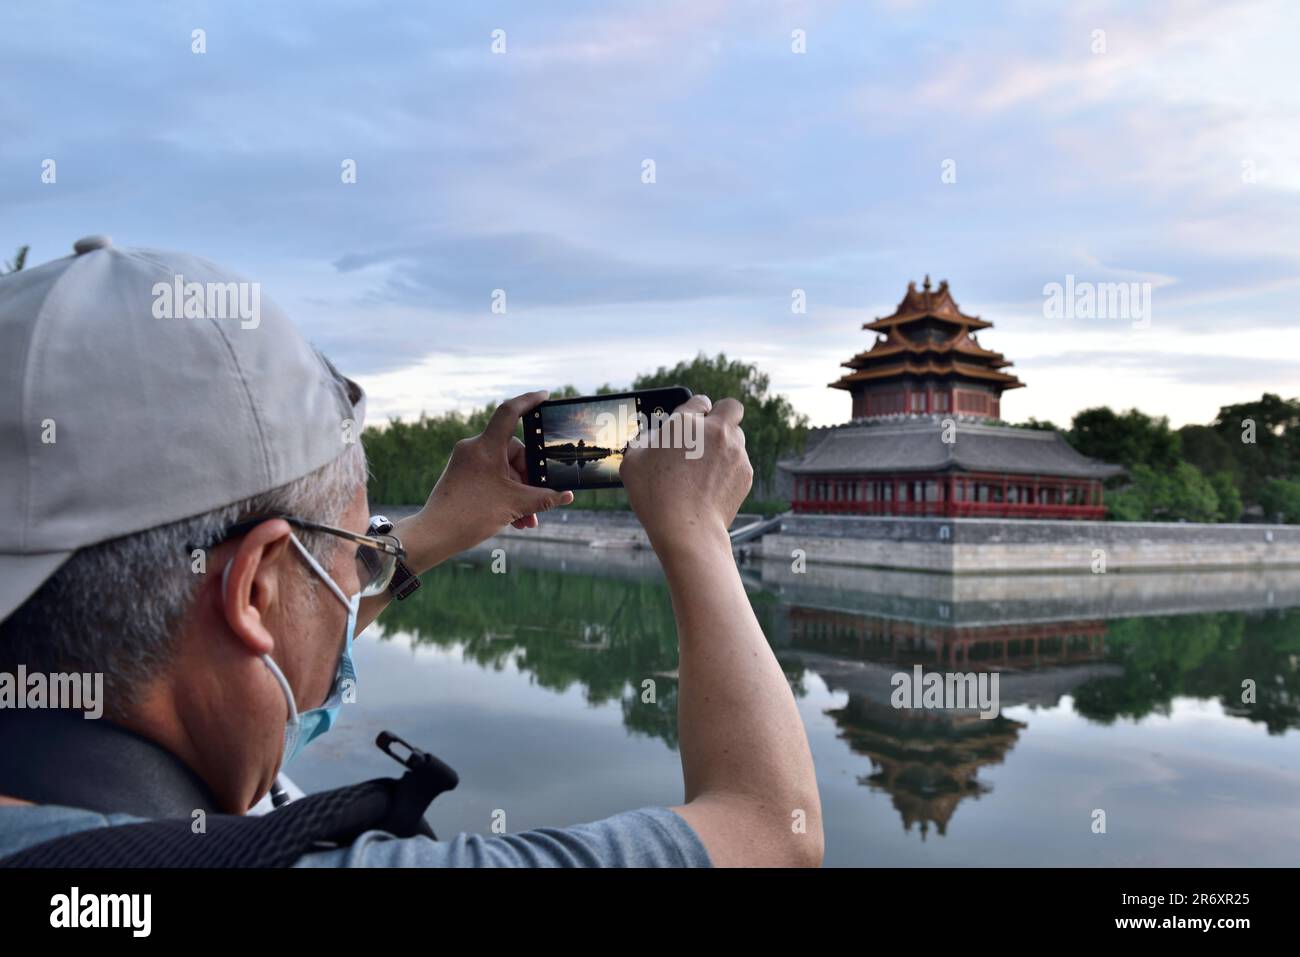 Forbidden City, Beijing,China Stock Photo